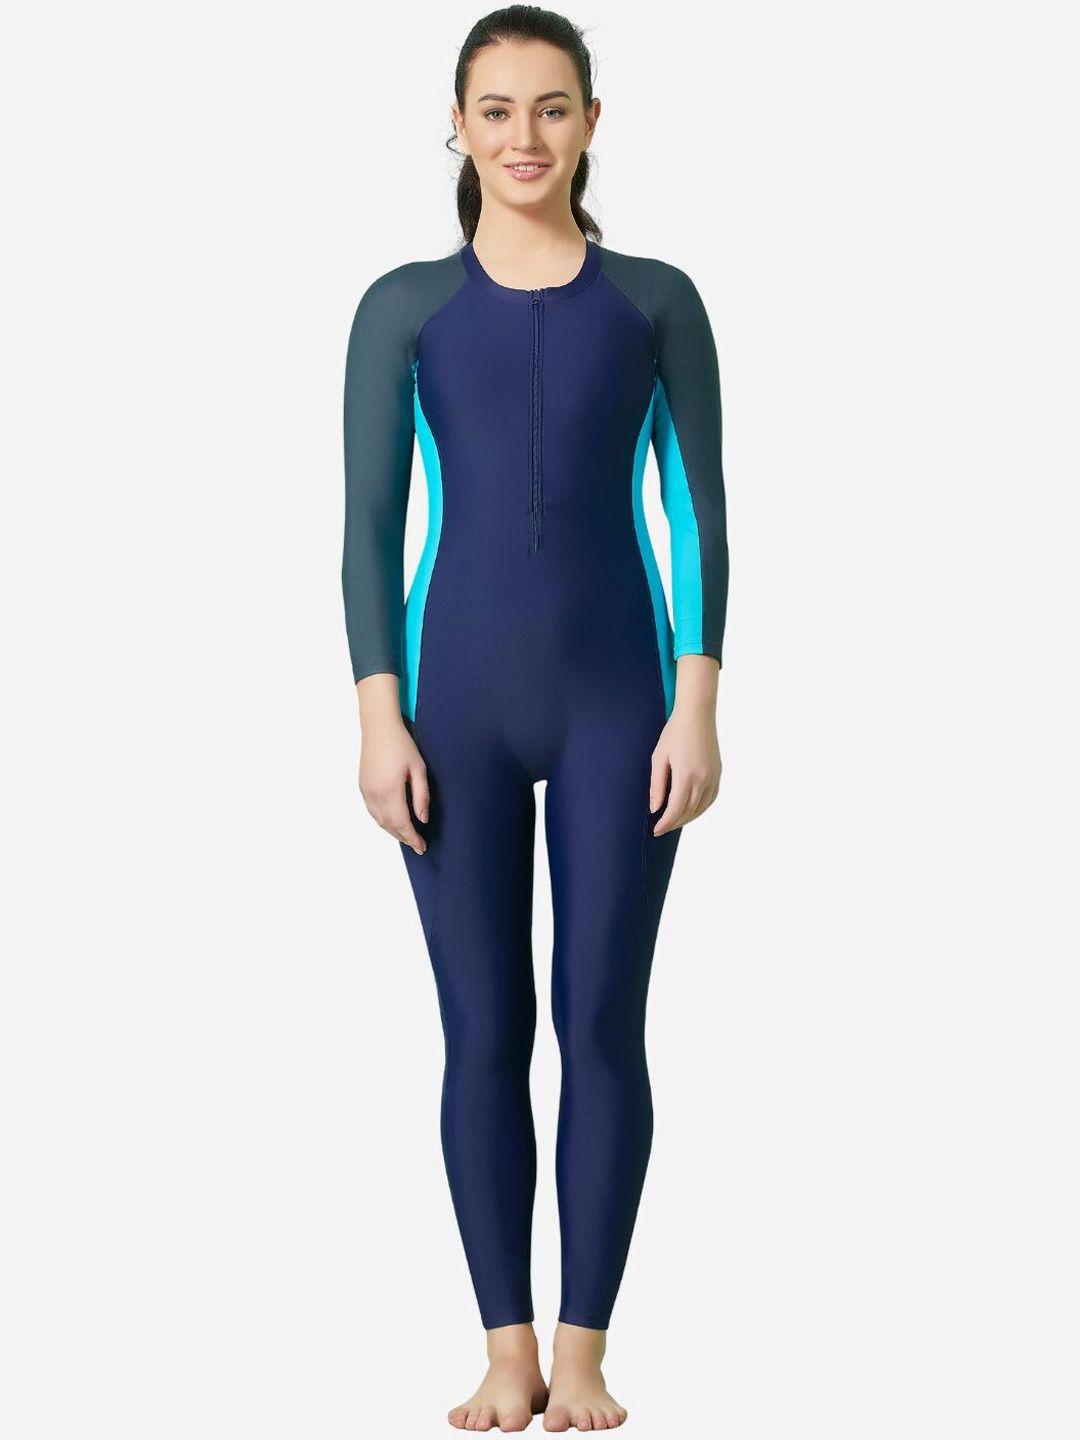 veloz colourblocked anti-chafing swimsuit